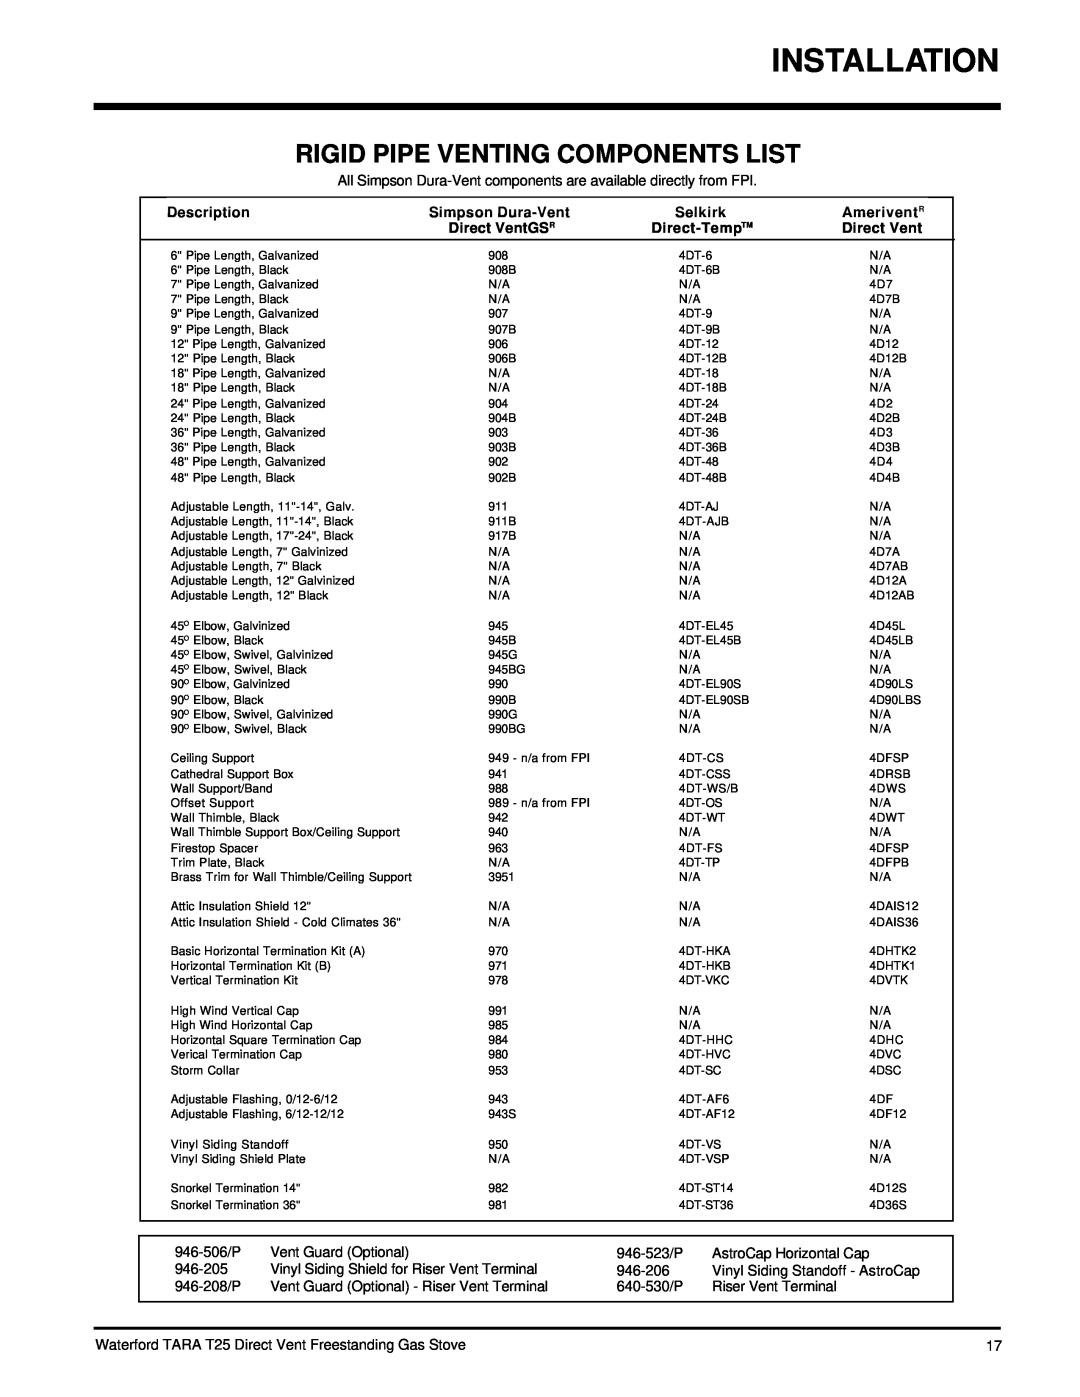 Waterford Appliances T25-LP Rigid Pipe Venting Components List, Description, Simpson Dura-Vent, Selkirk, AmeriventR 